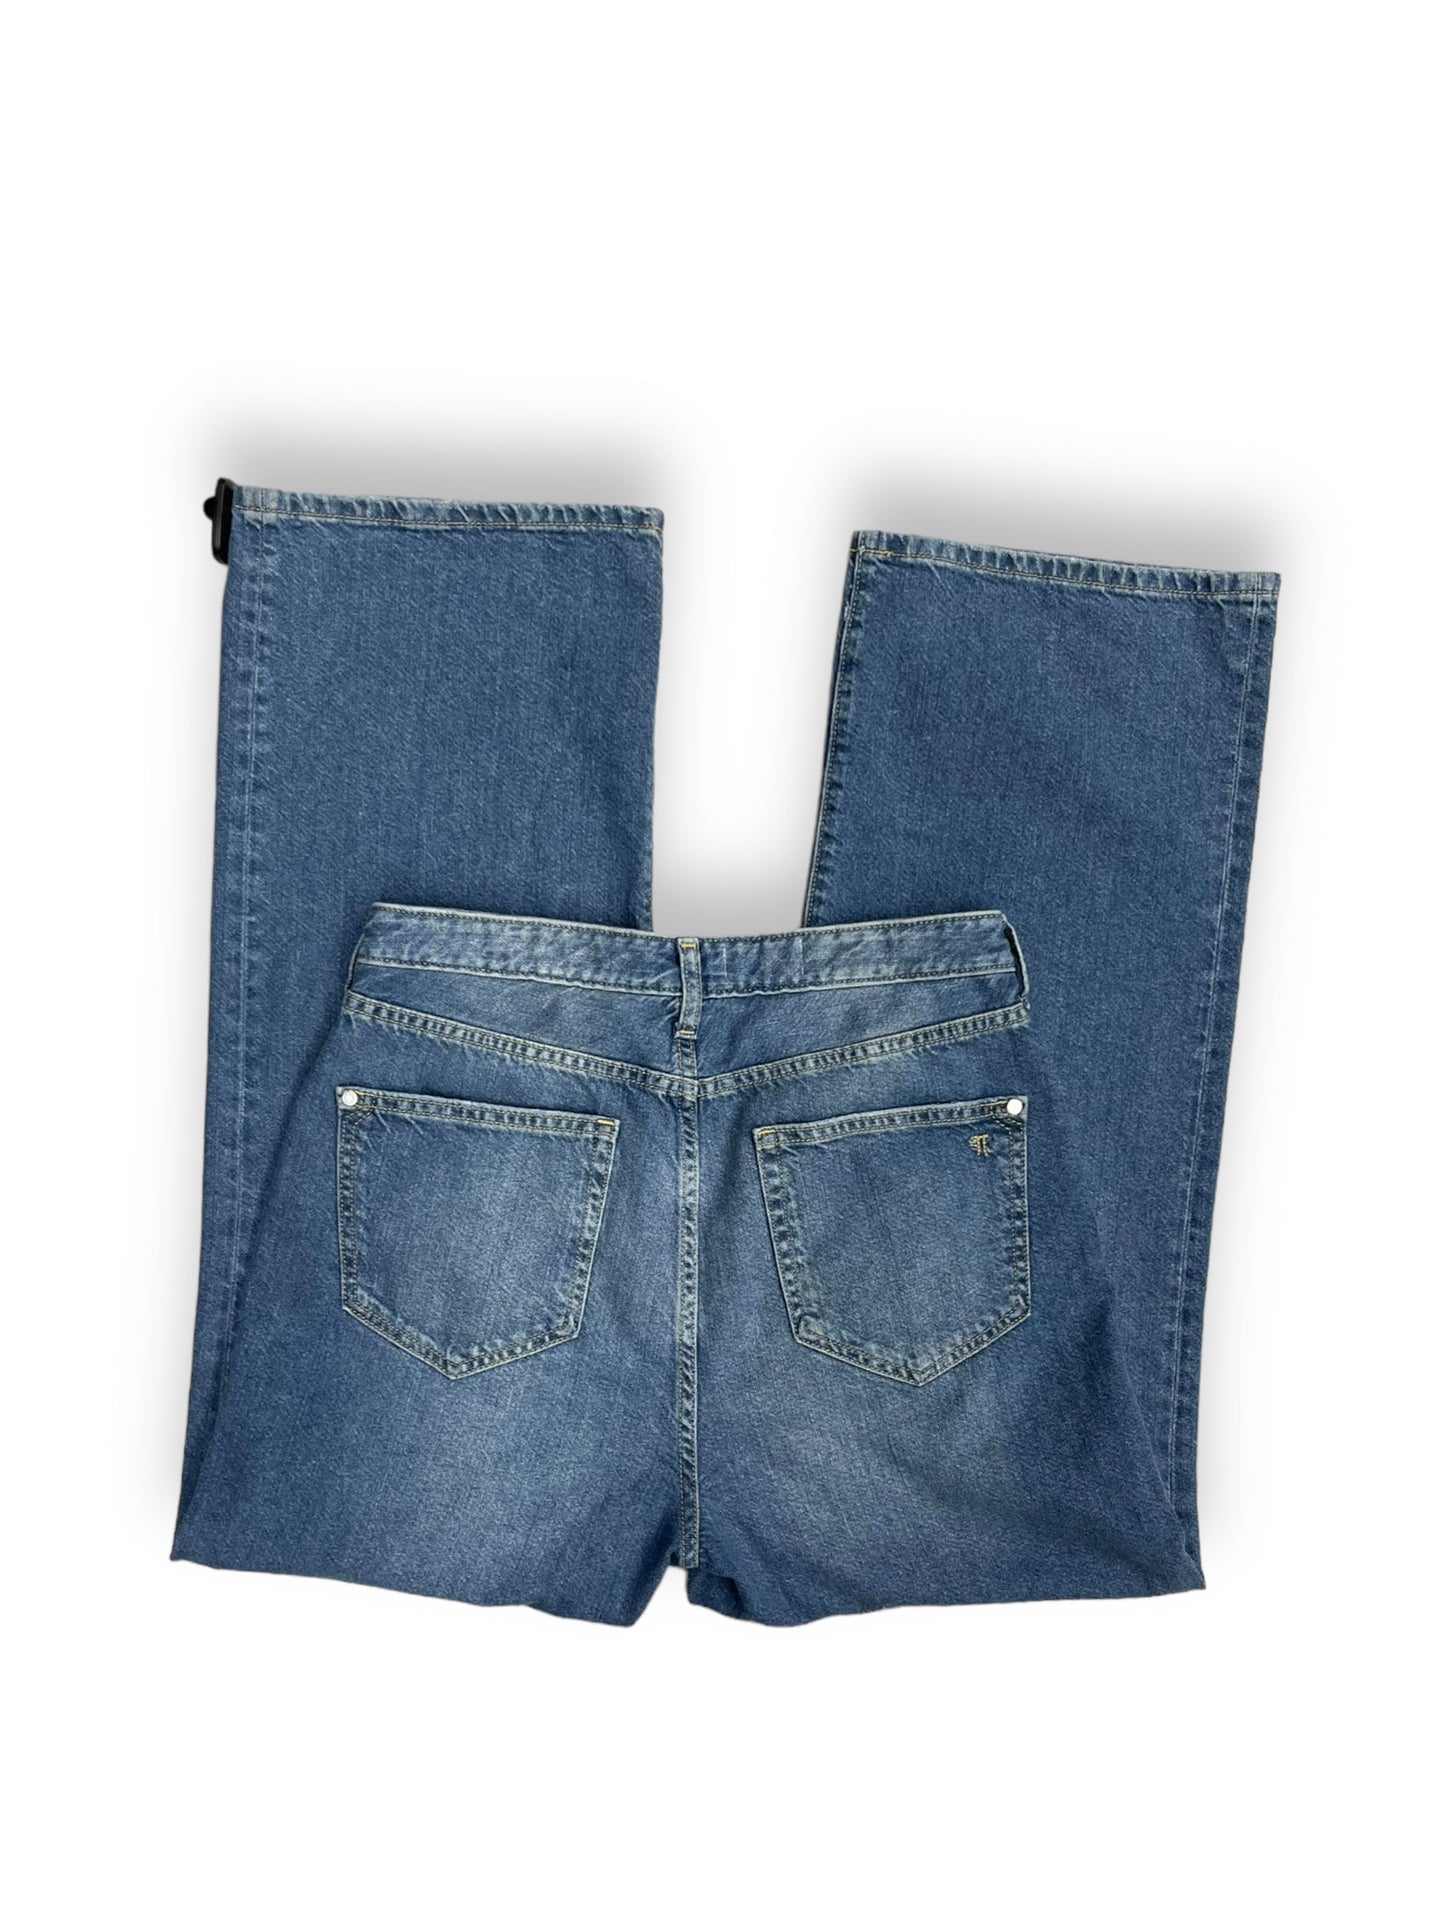 Jeans Wide Leg By Pilcro  Size: 30